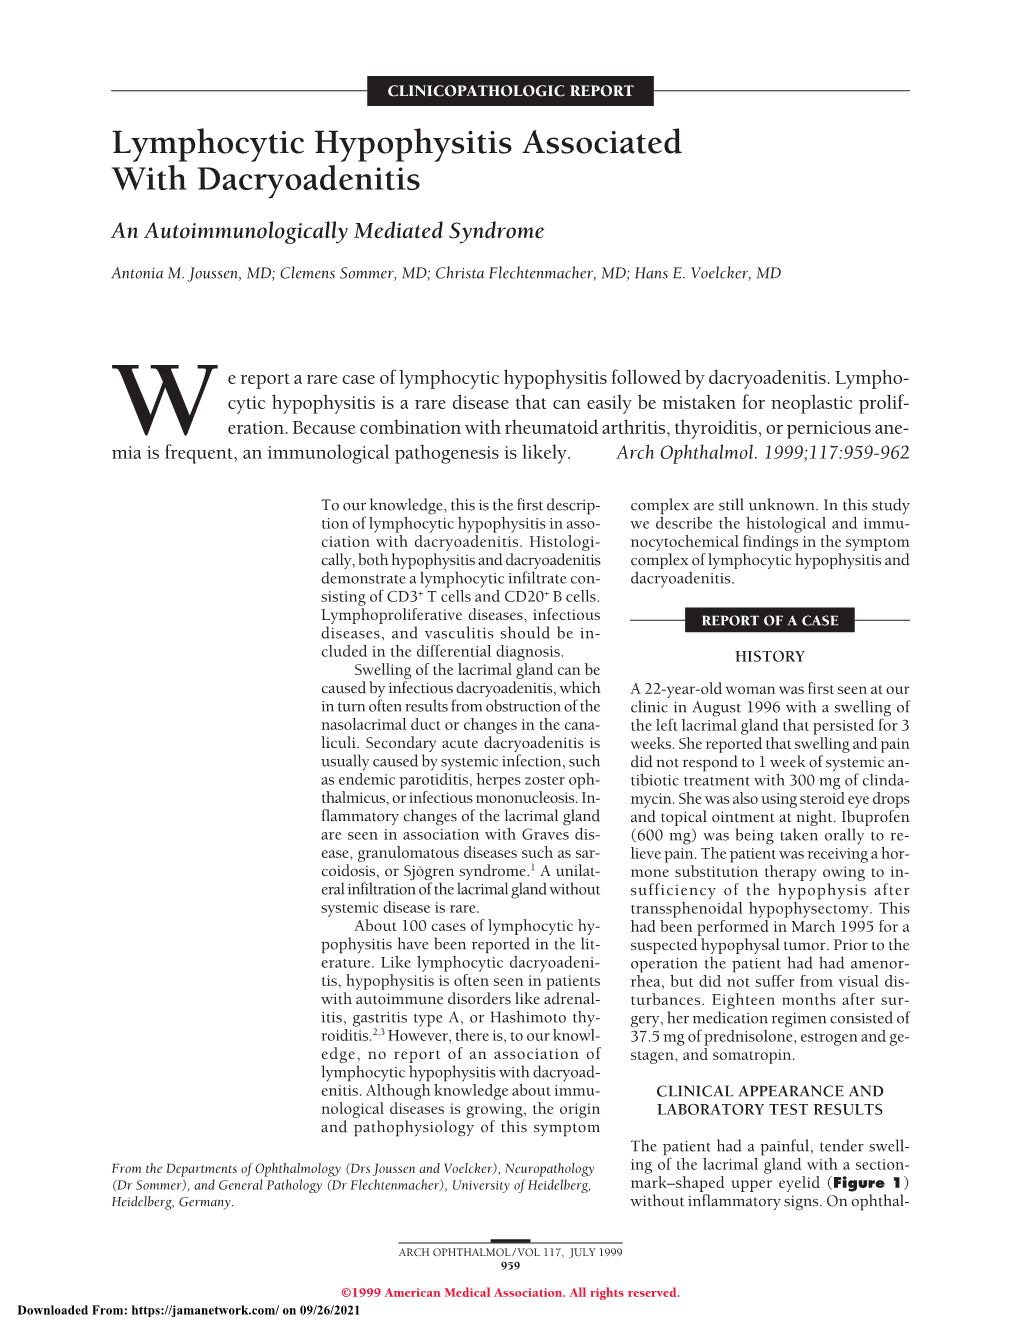 Lymphocytic Hypophysitis Associated with Dacryoadenitis an Autoimmunologically Mediated Syndrome